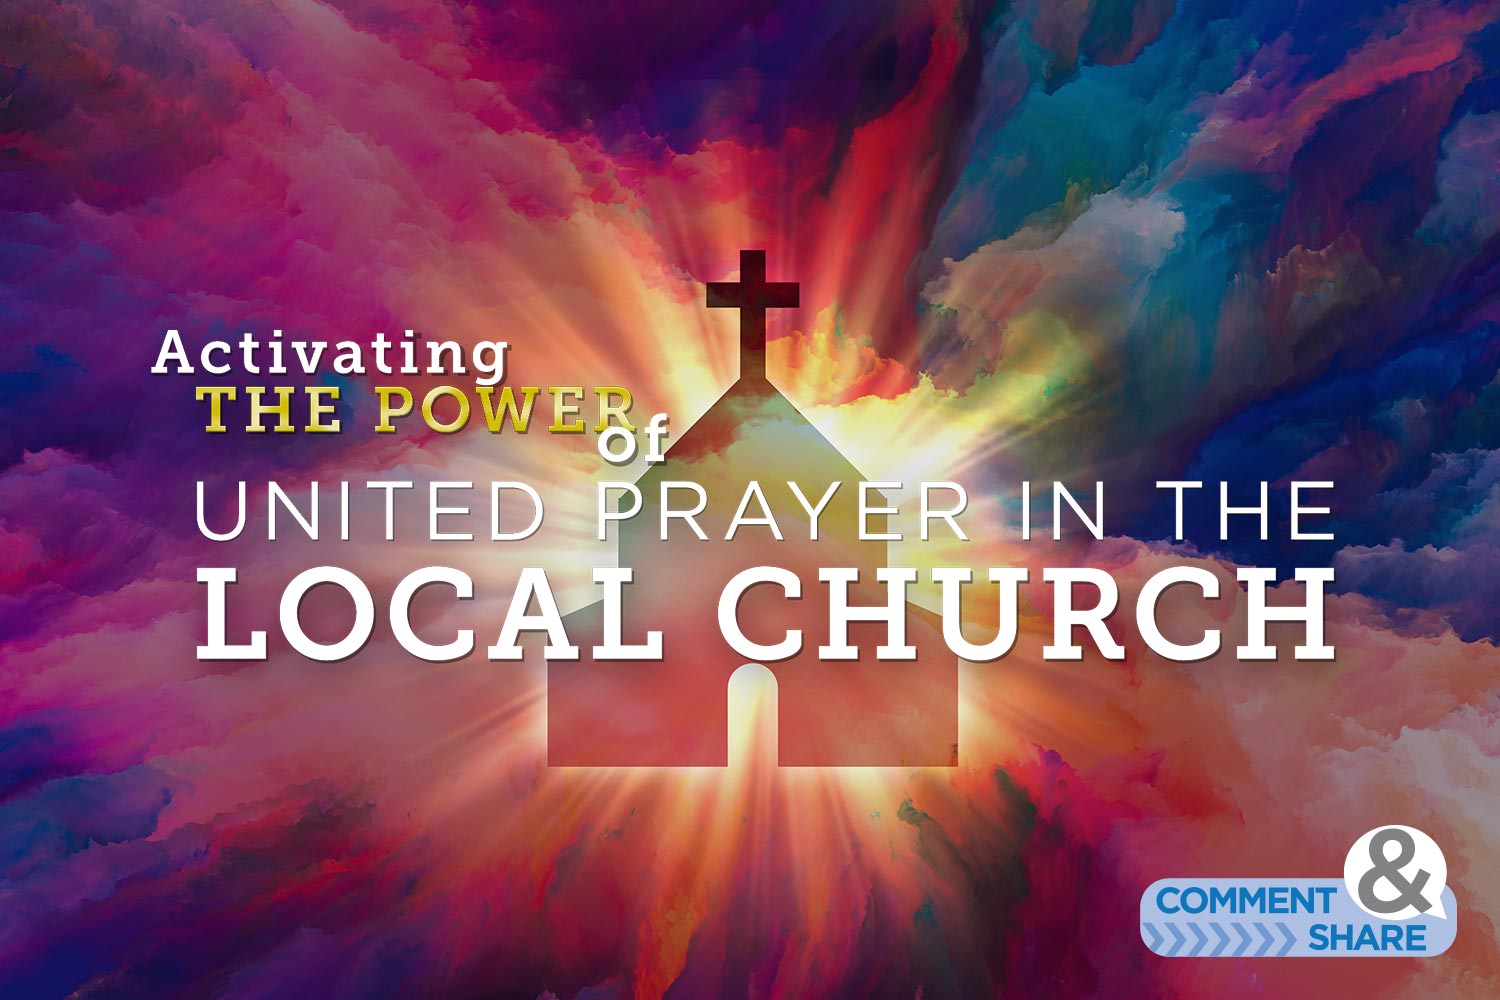 United Prayer in the Local Church